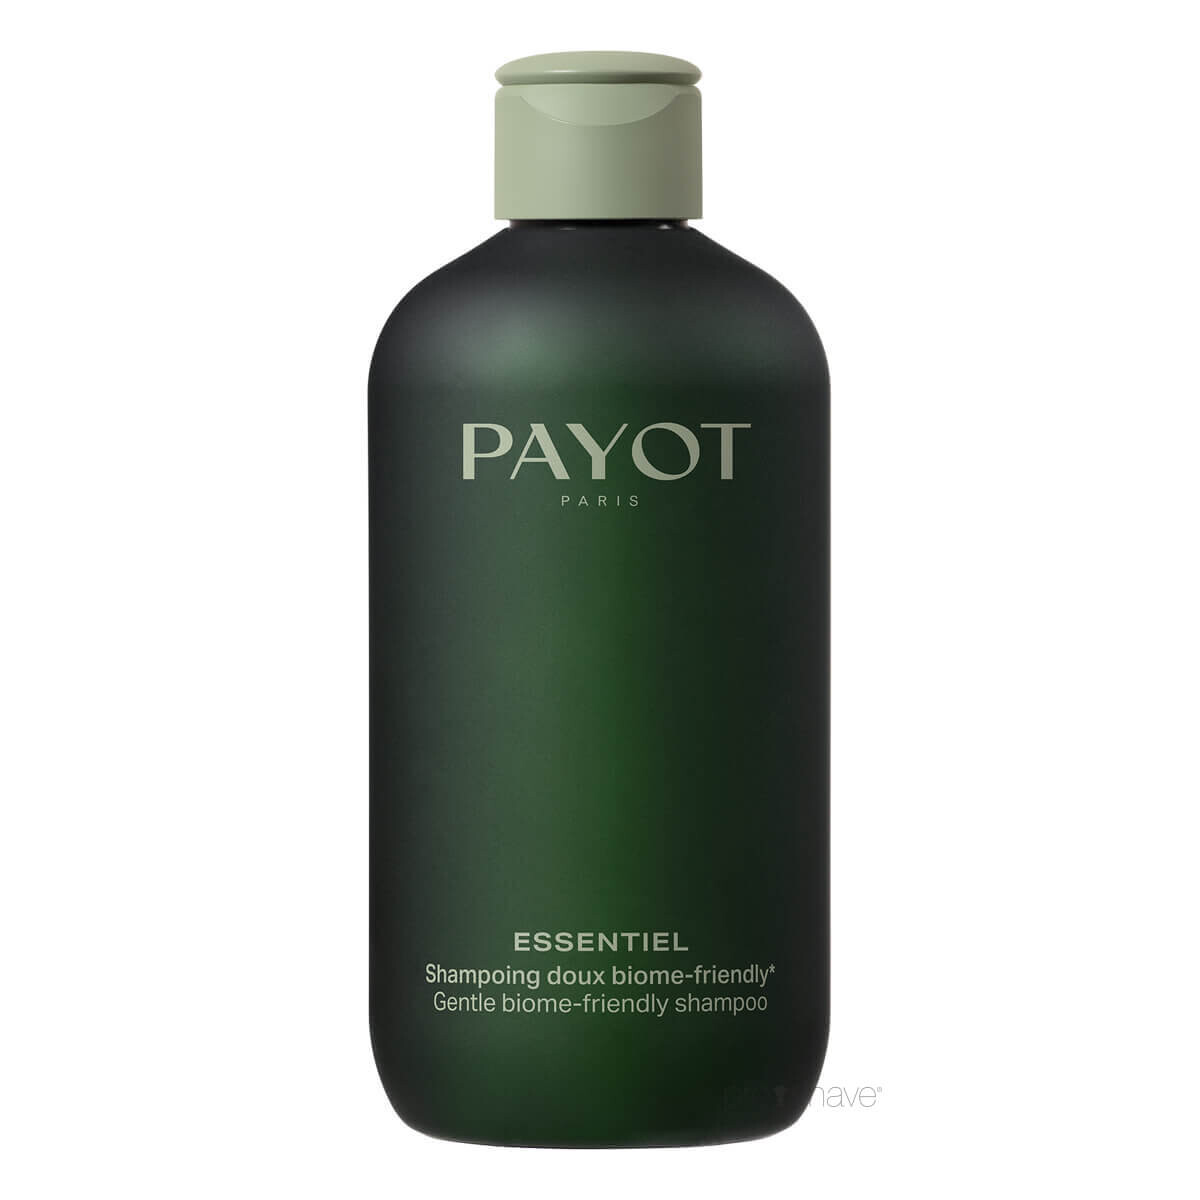 Billede af Payot Essentiel Gentle Biome-Friendly Shampoo, 280 ml.